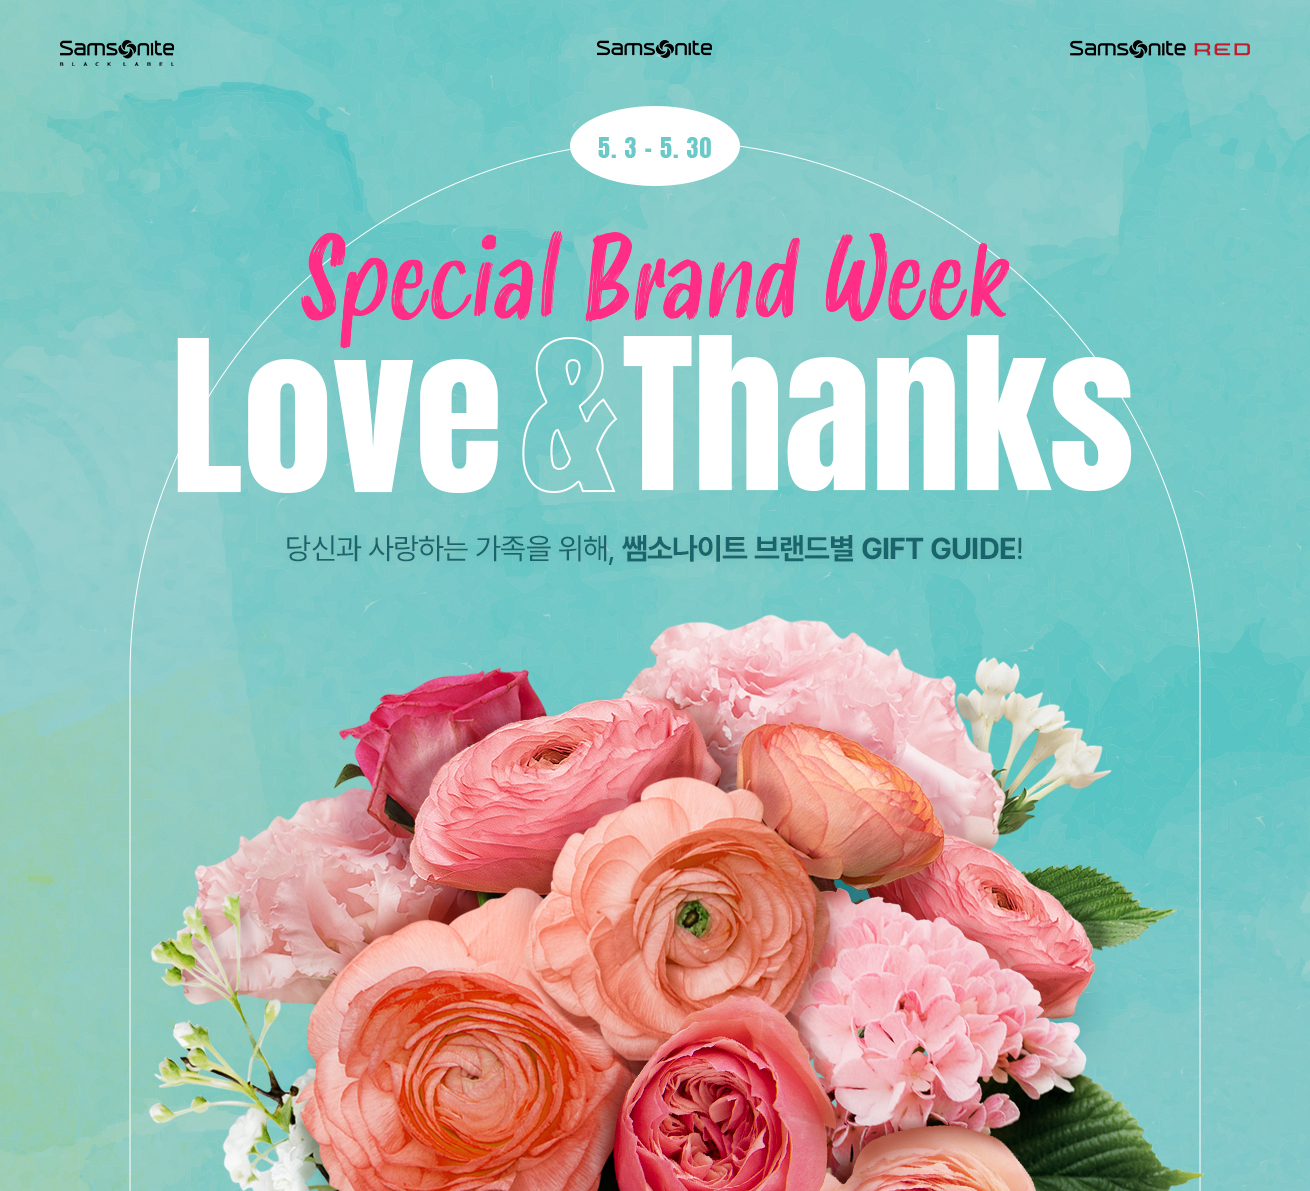 Special Brand Week Love & Thanks (당신과 사랑하는 가족을 위해, 쌤소나이트 브랜드별 GIFT GUIDE!)